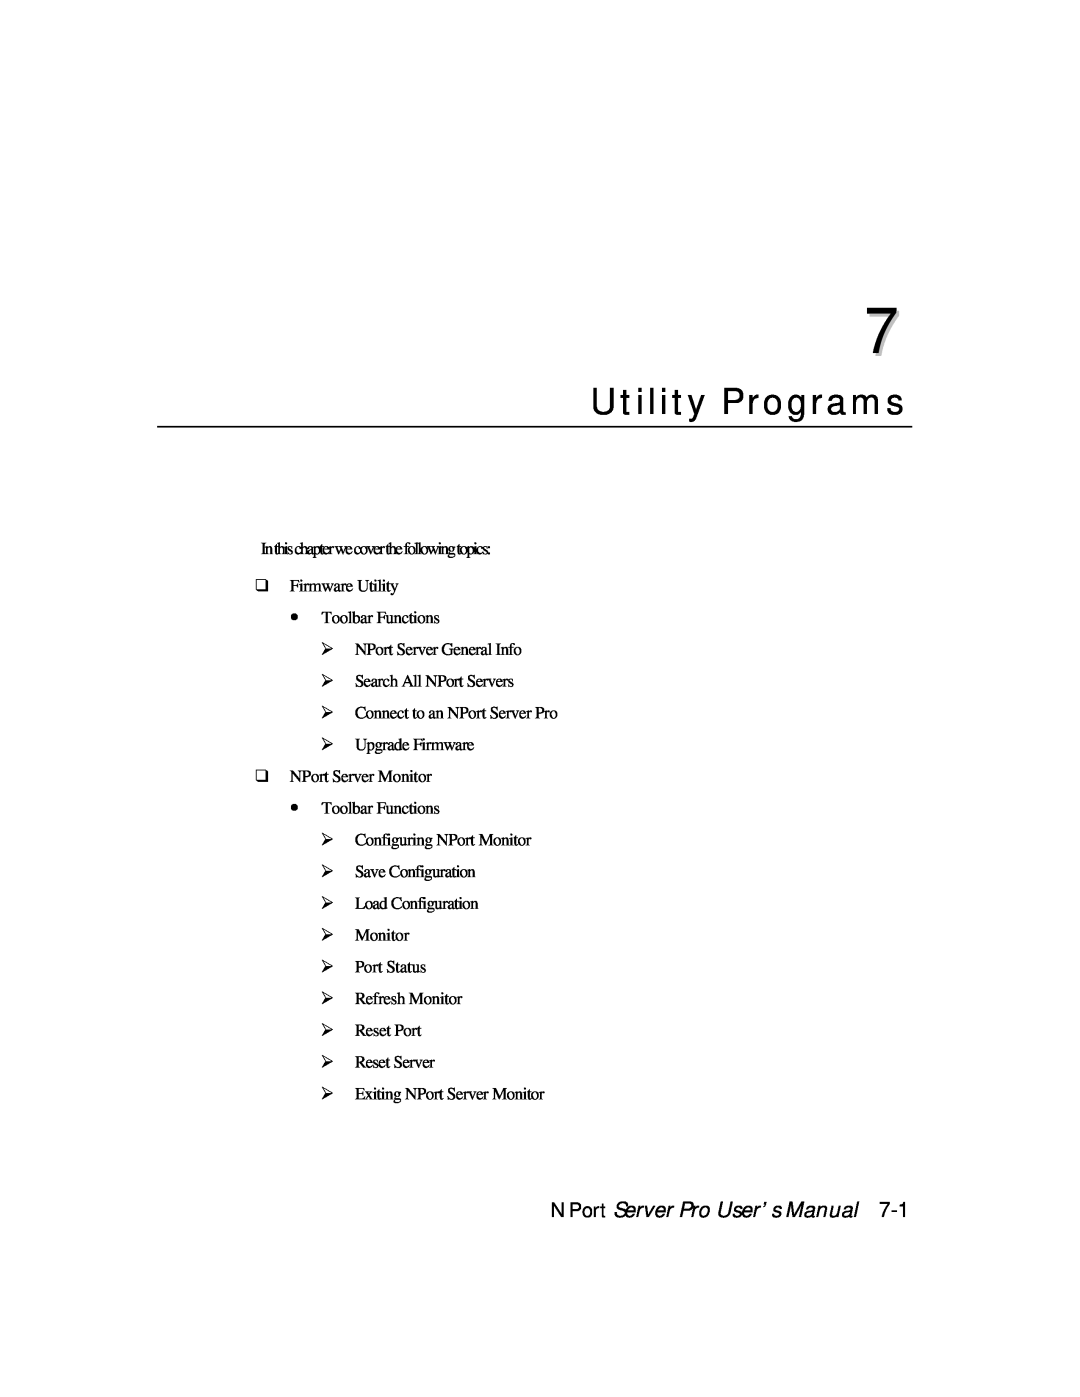 Moxa Technologies DE-308, DE-303 manual Utility Programs, NPort Server Pro User’s Manual 